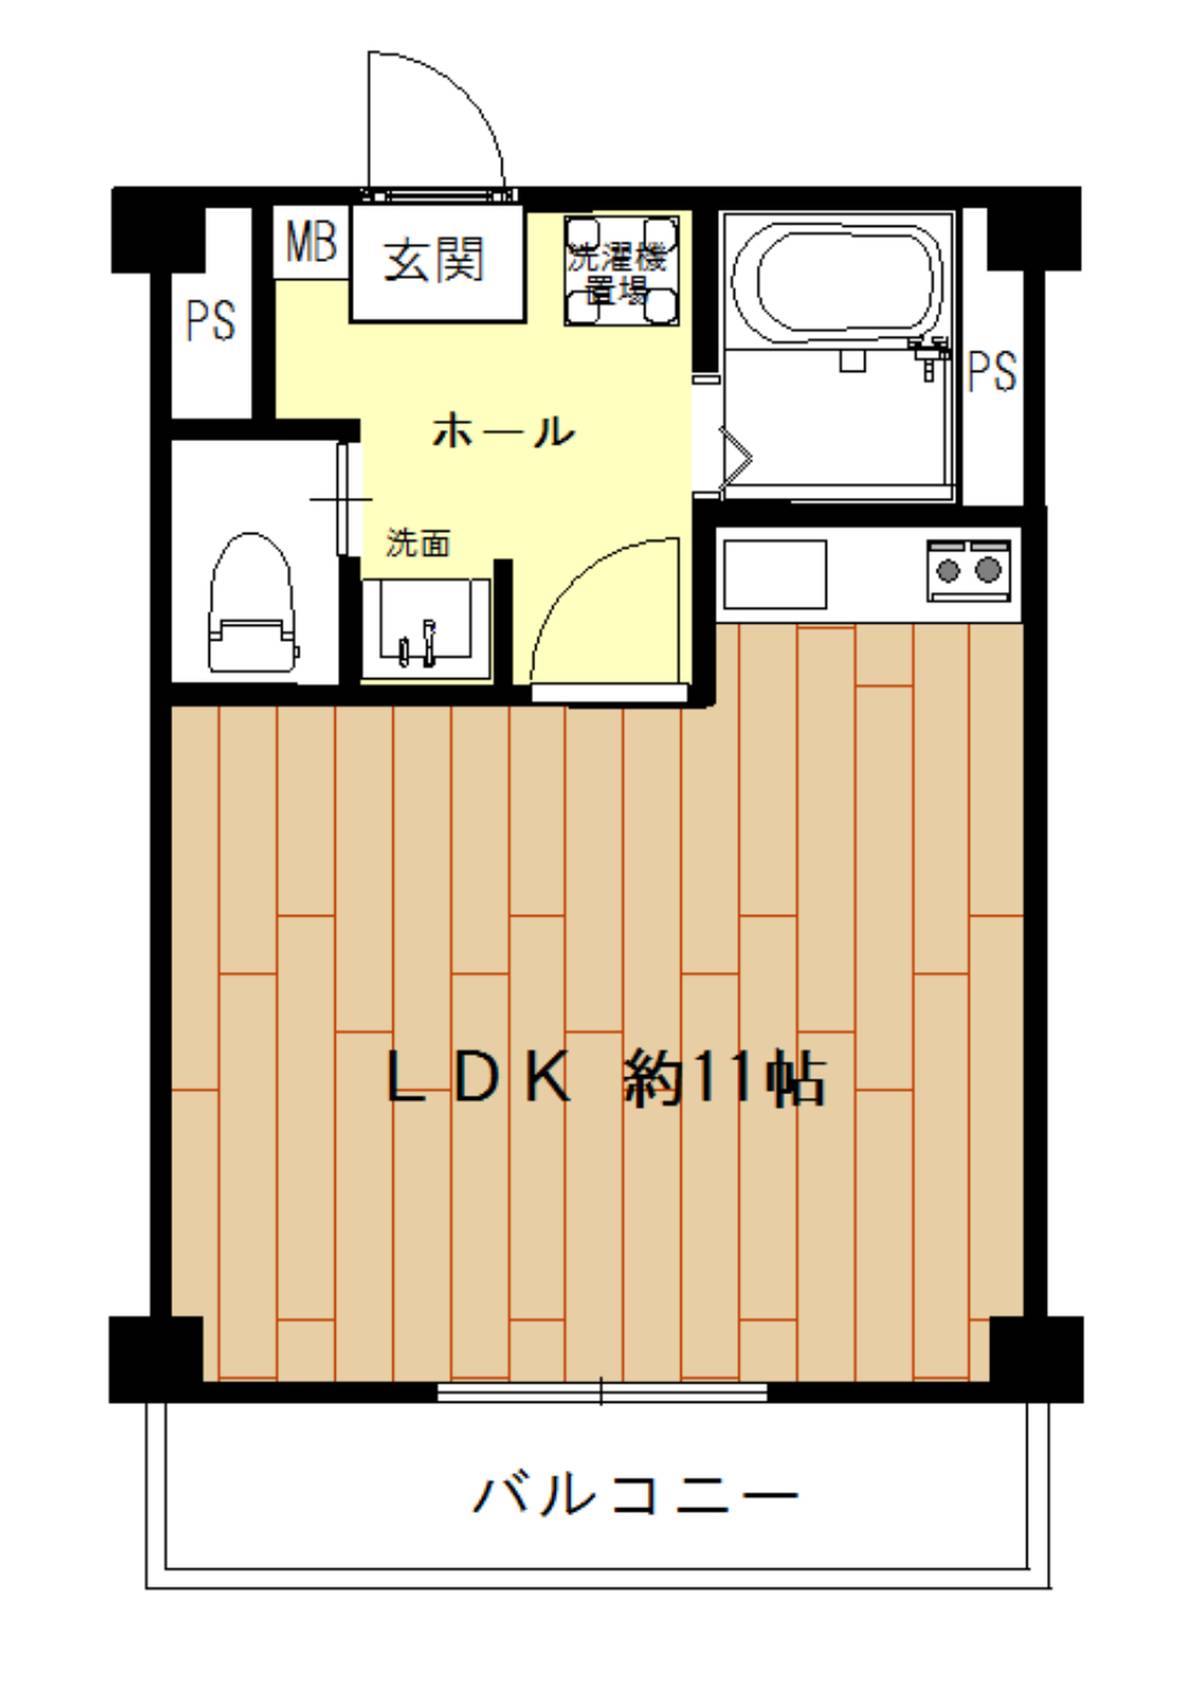 1R floorplan of Village House Onoda in Sanyoonoda-shi